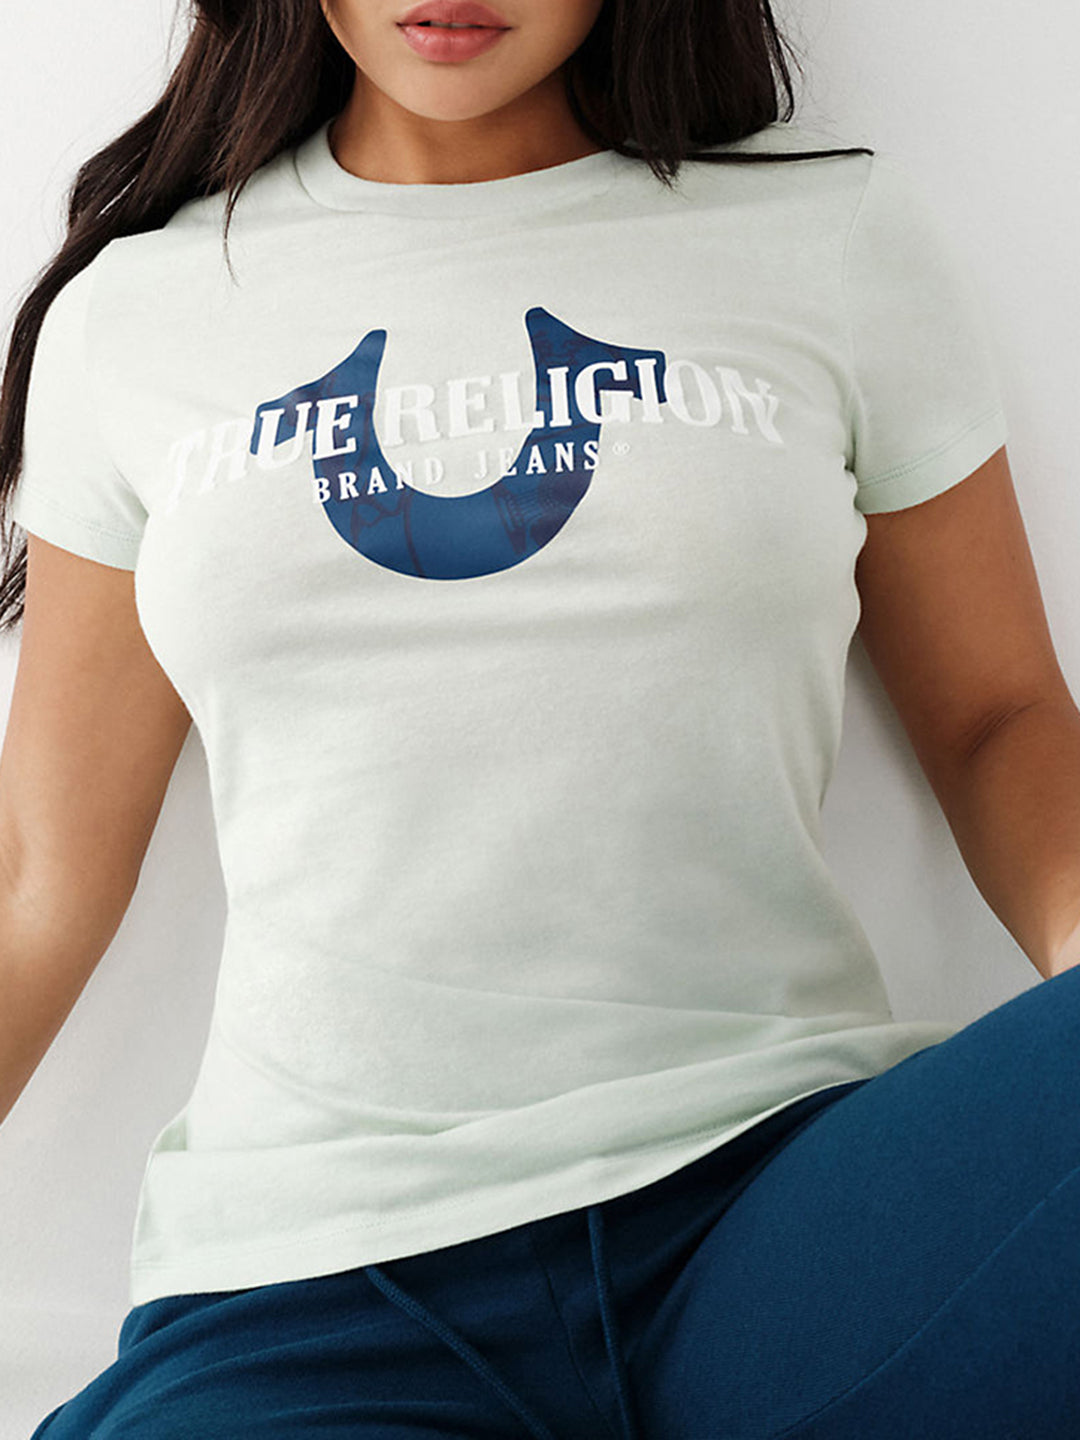 True Religion White Logo Slim Fit T-Shirt